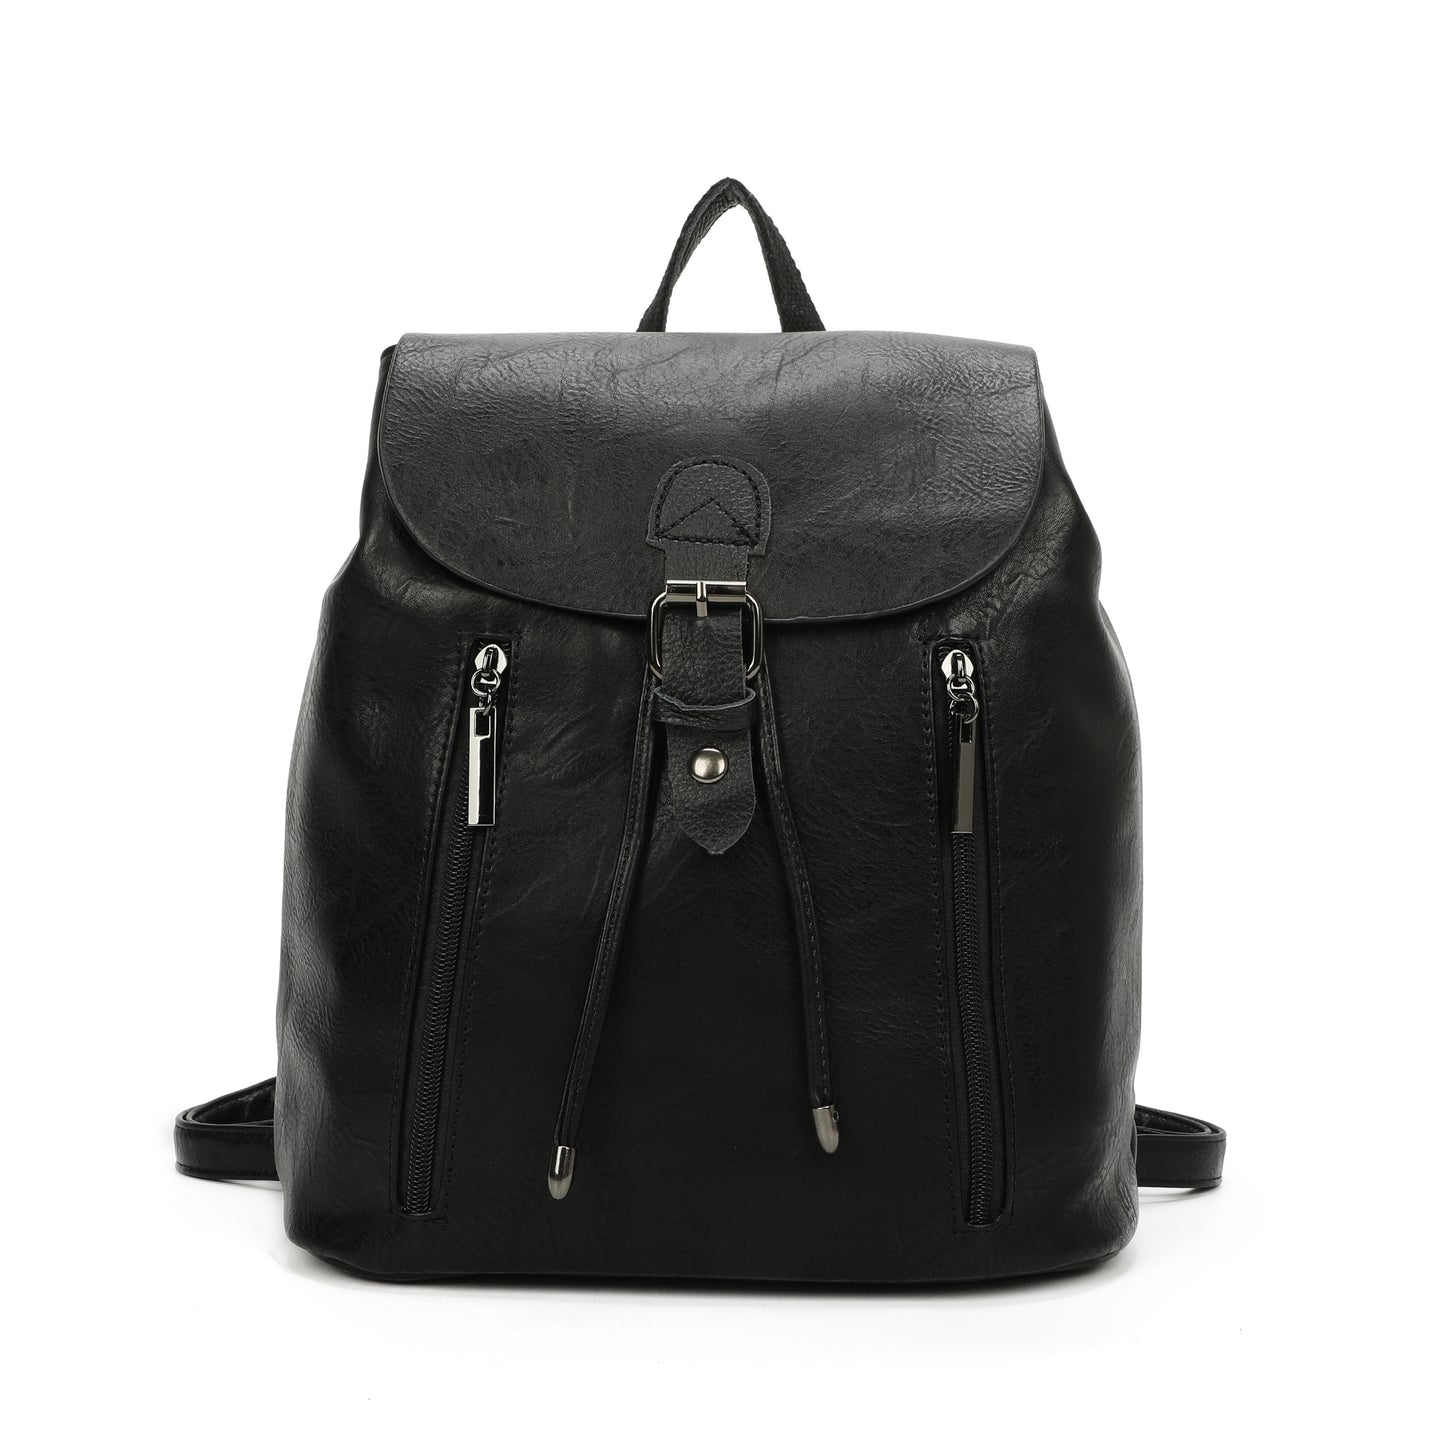 Buckle backpack